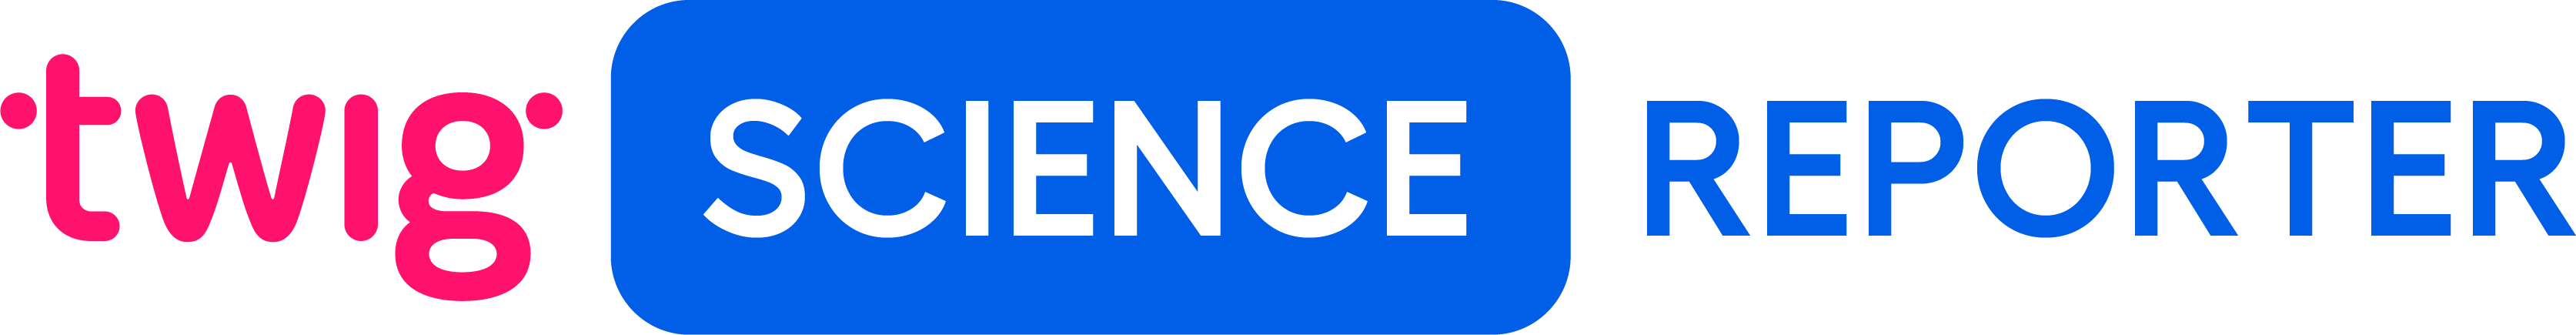 Twig Science Reporter logo